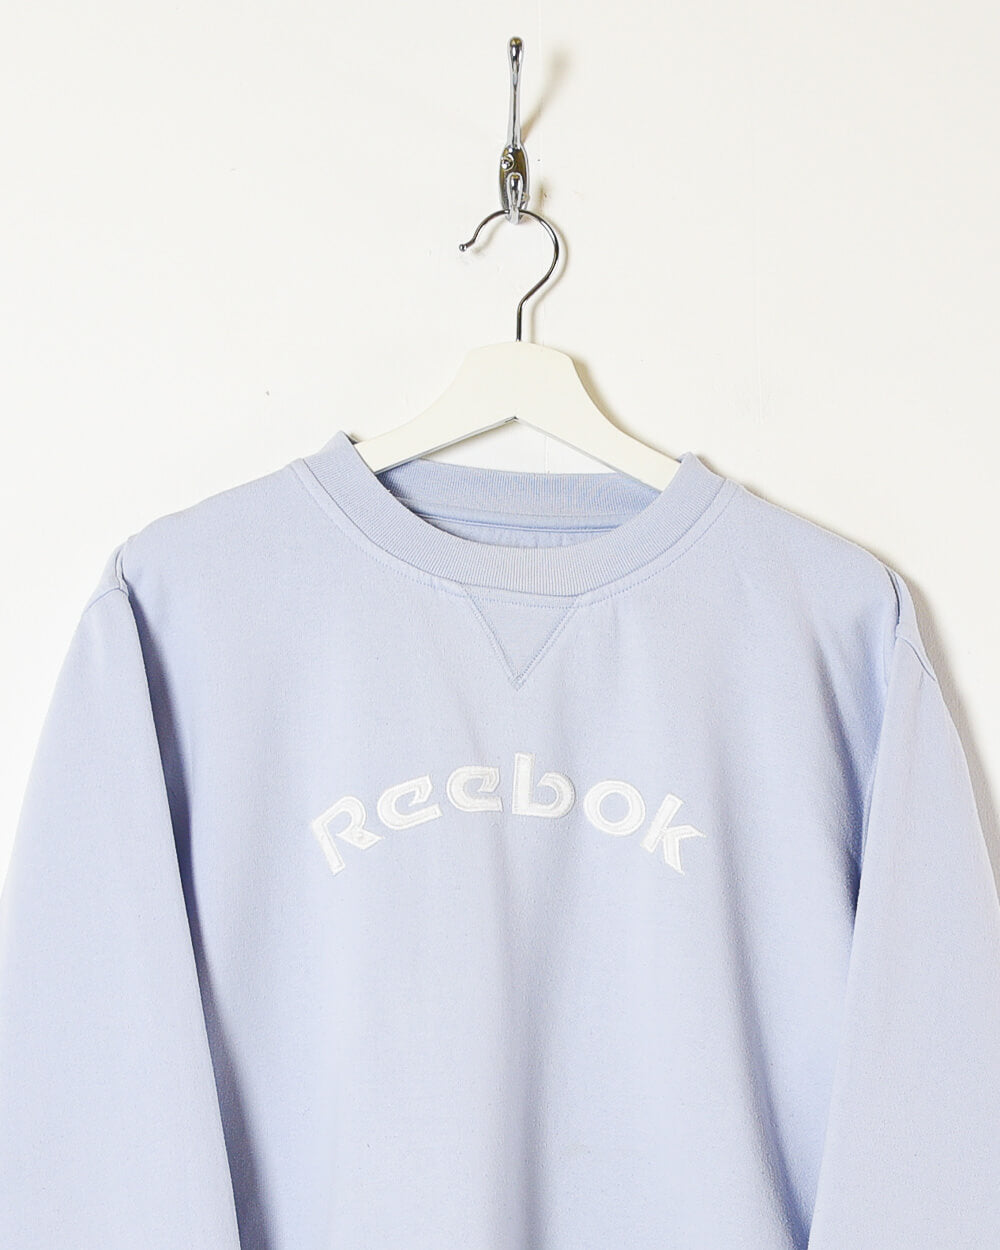 Baby Reebok Women's Sweatshirt - Large